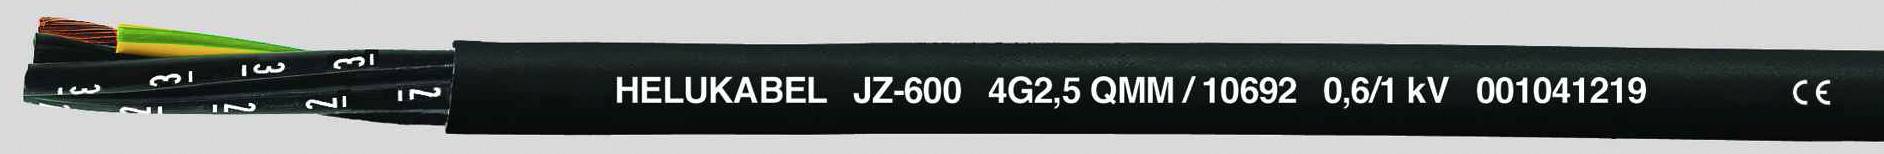 HELUKABEL JZ-600 Steuerleitung 7 G 0.75 mm² Schwarz 10591-1000 1000 m